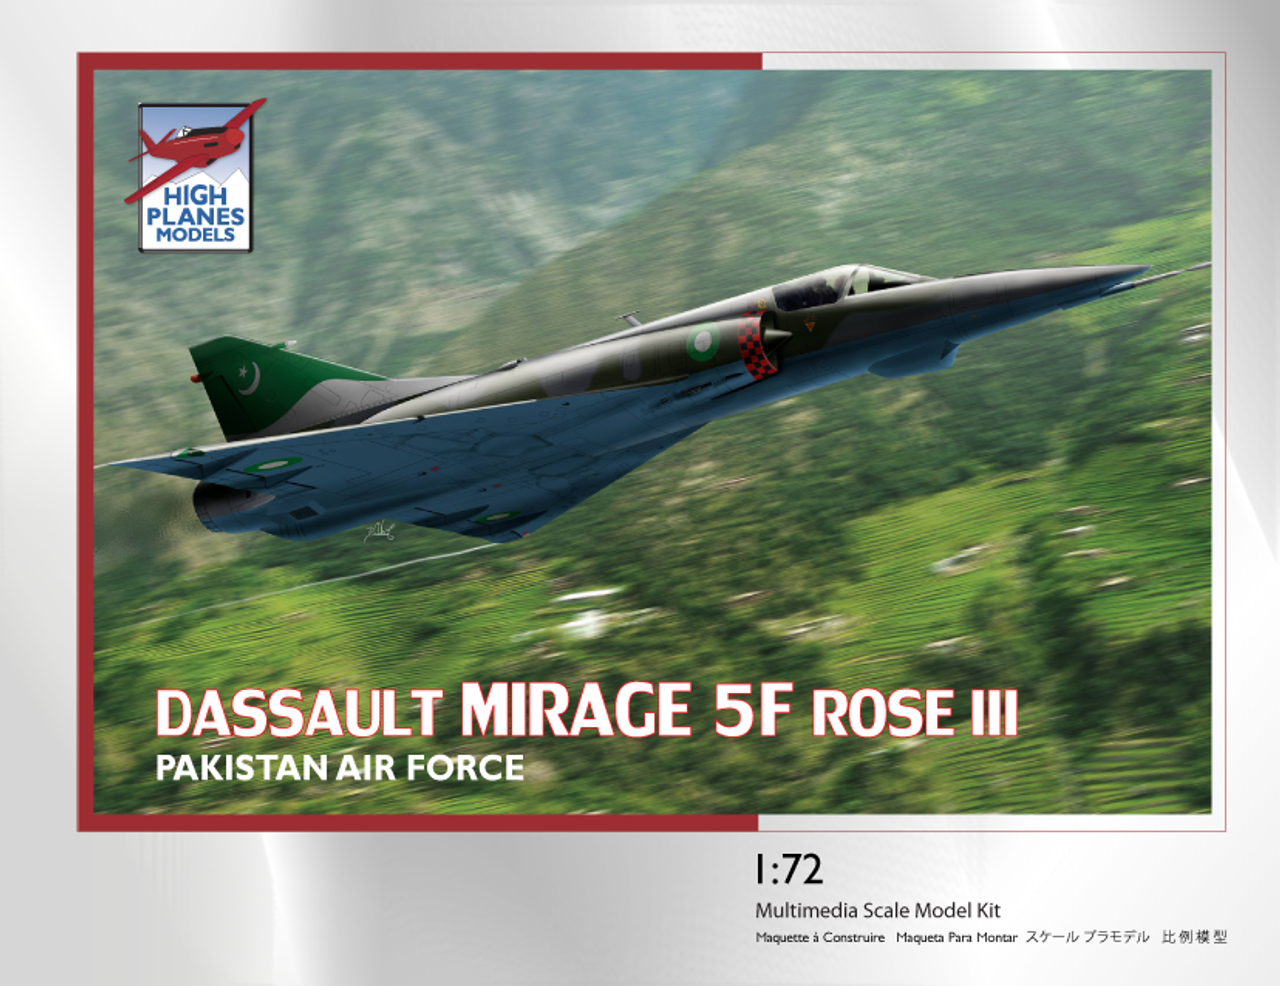 High Planes HPK072114 Dassault Mirage 5F ROSE III Scale Model Kit 1:72